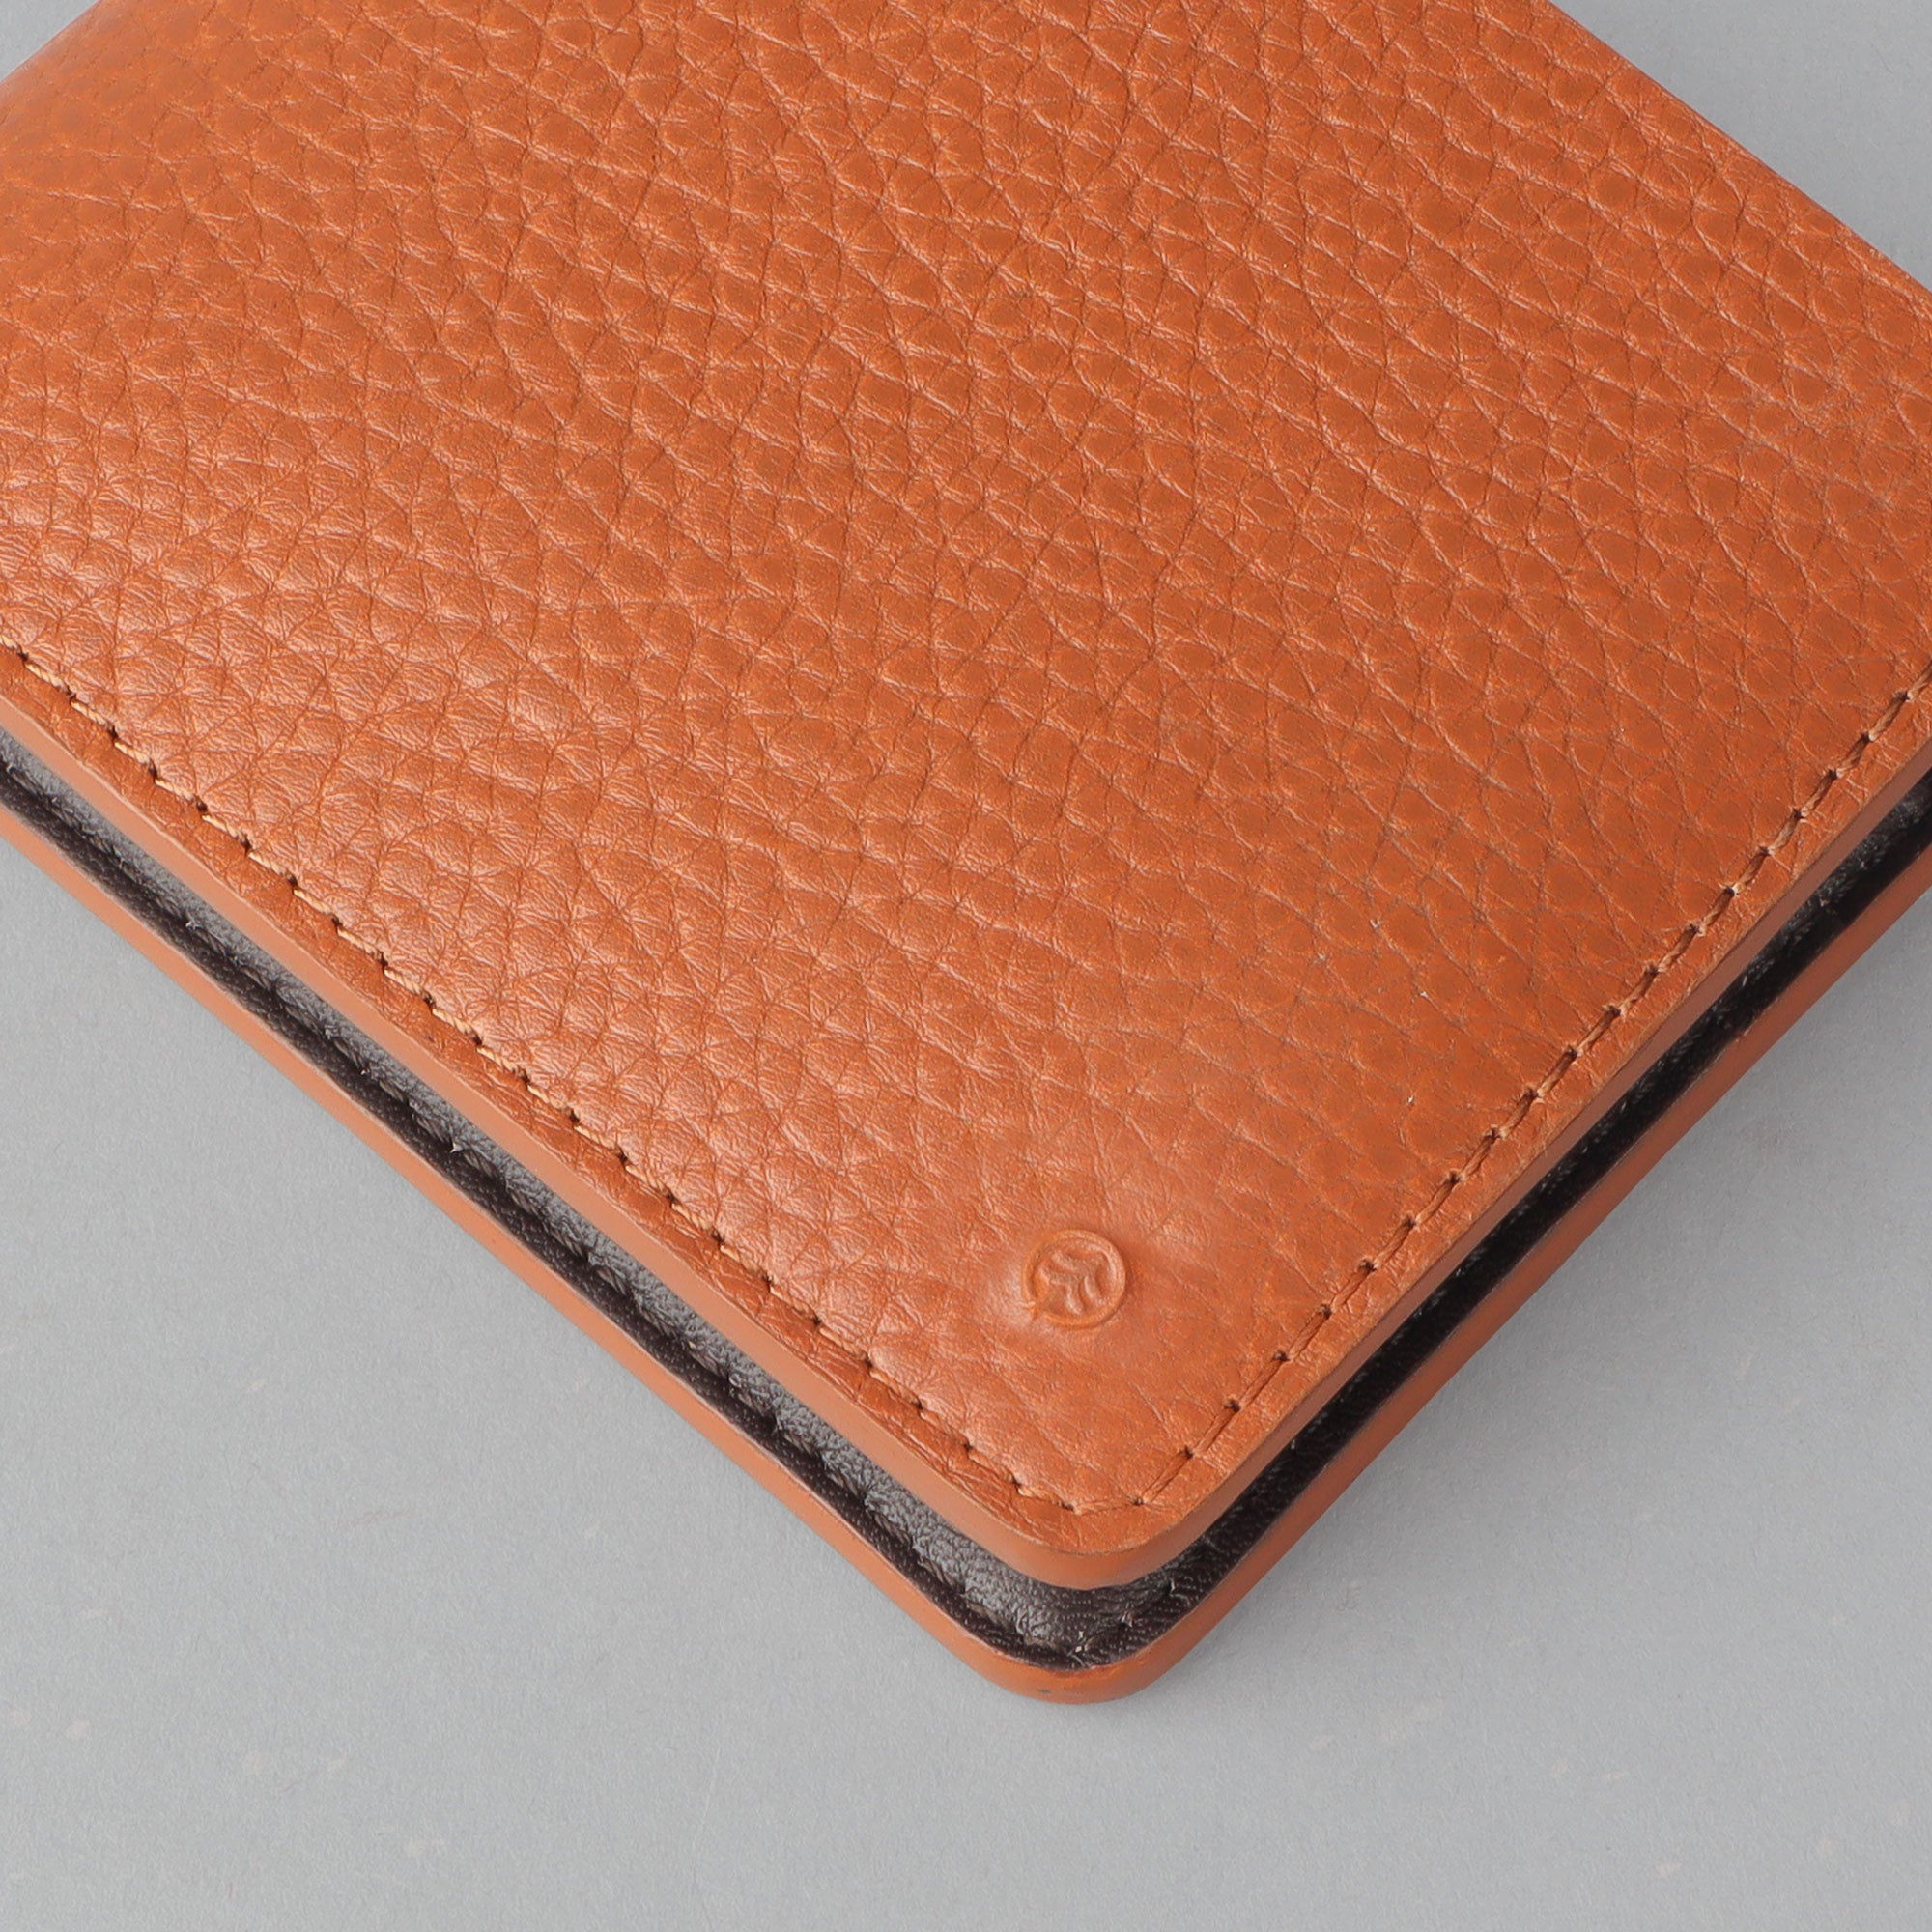 Tan leather bi-fold wallet